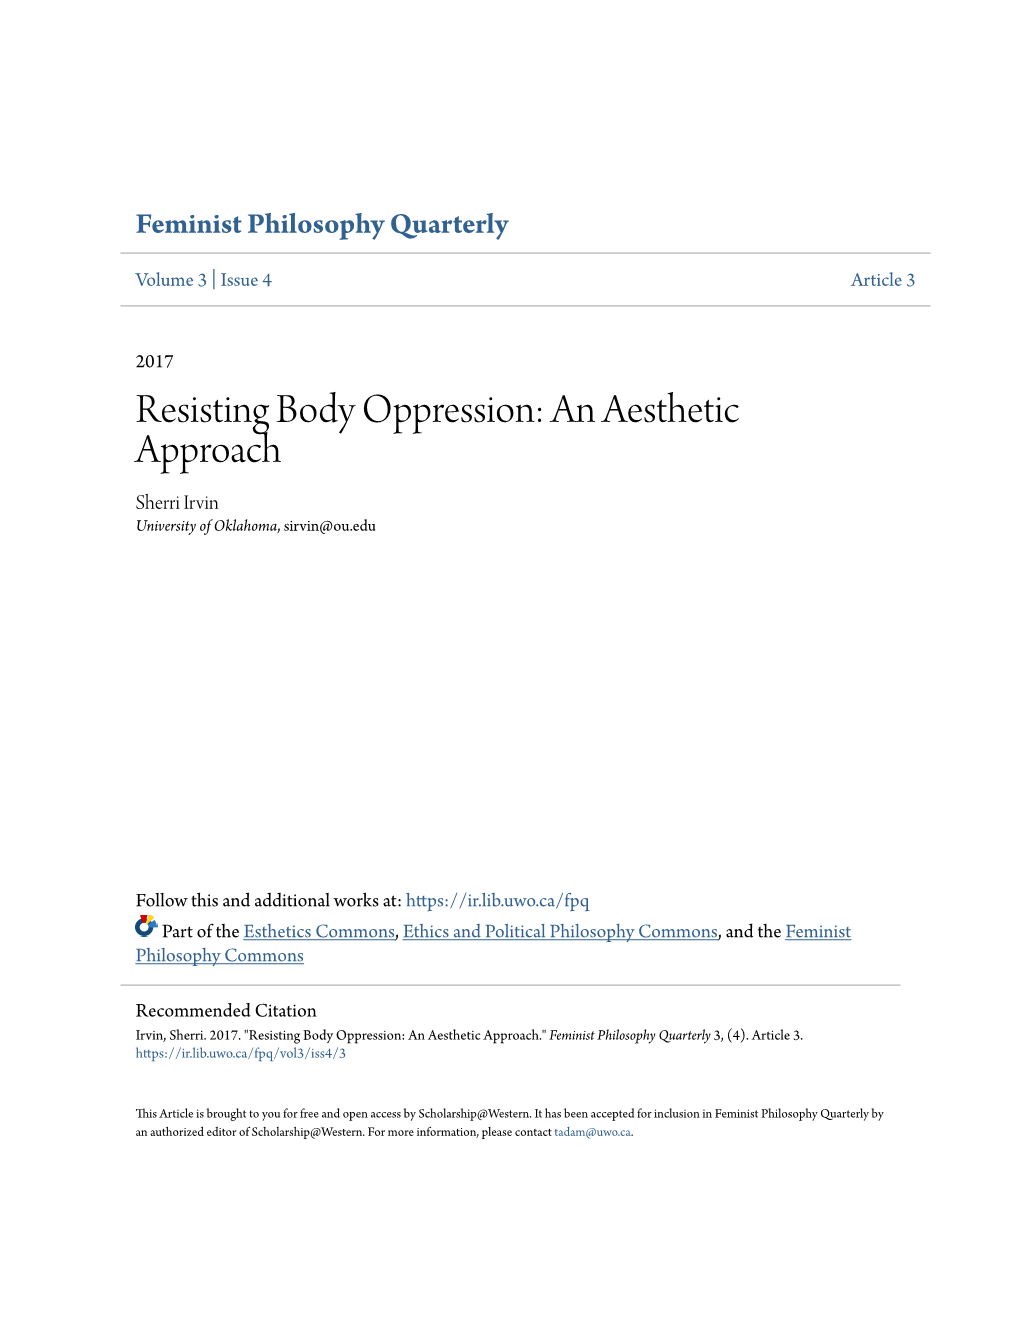 Resisting Body Oppression: an Aesthetic Approach Sherri Irvin University of Oklahoma, Sirvin@Ou.Edu